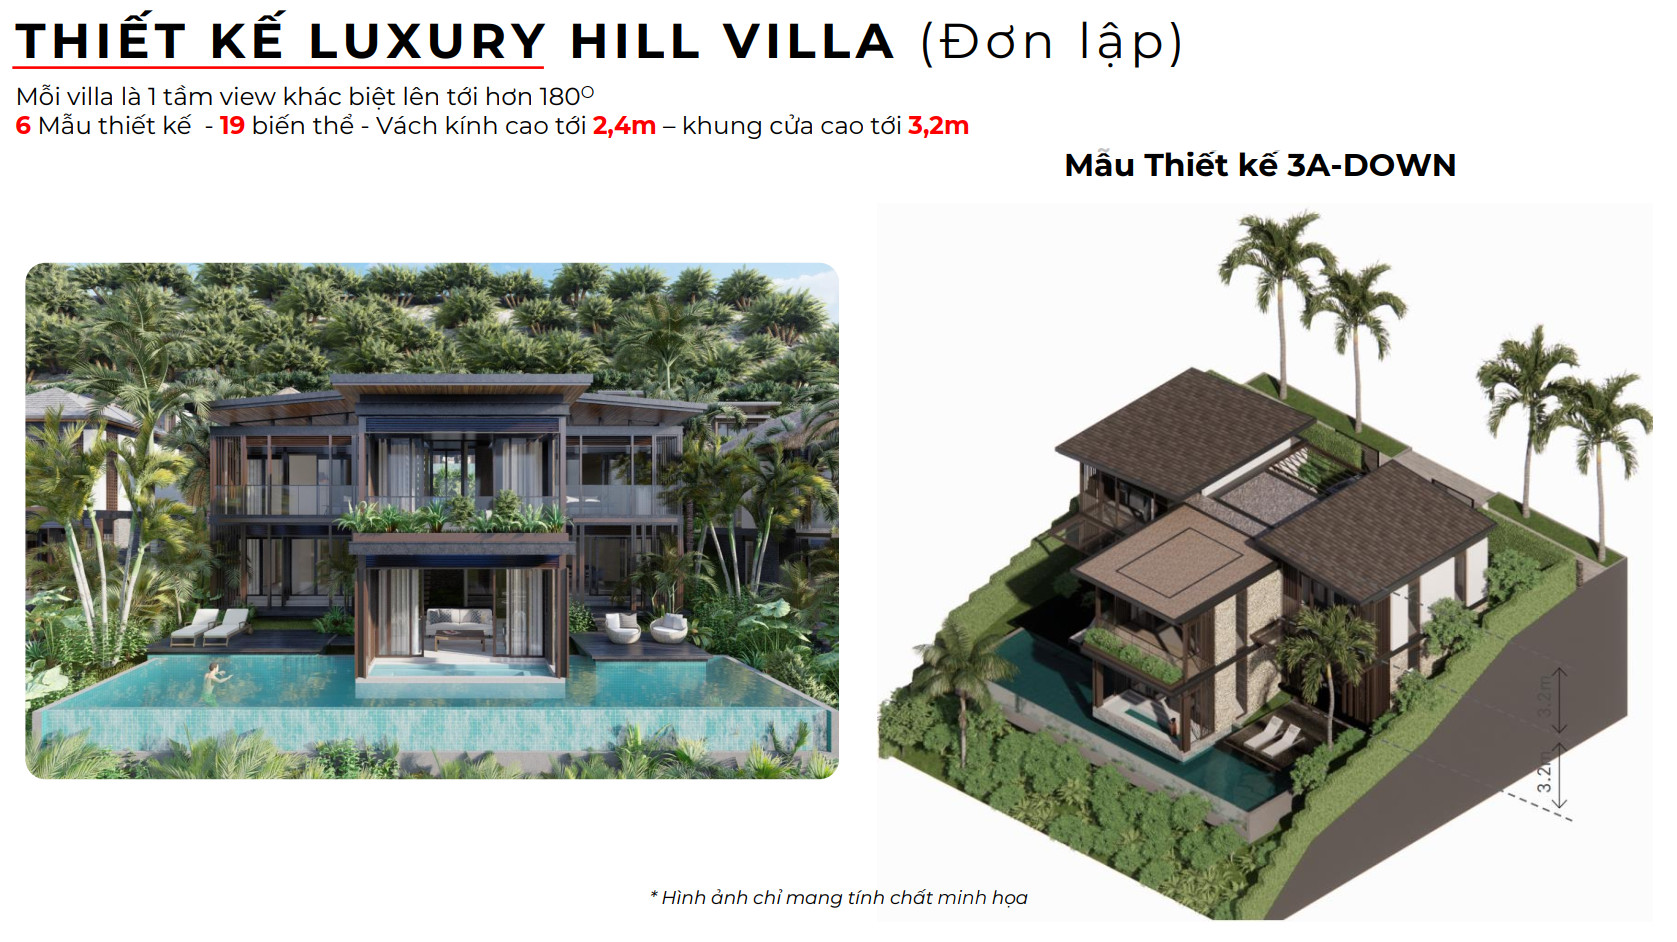 thiet ke luxury hill villa don lap bai sao 2